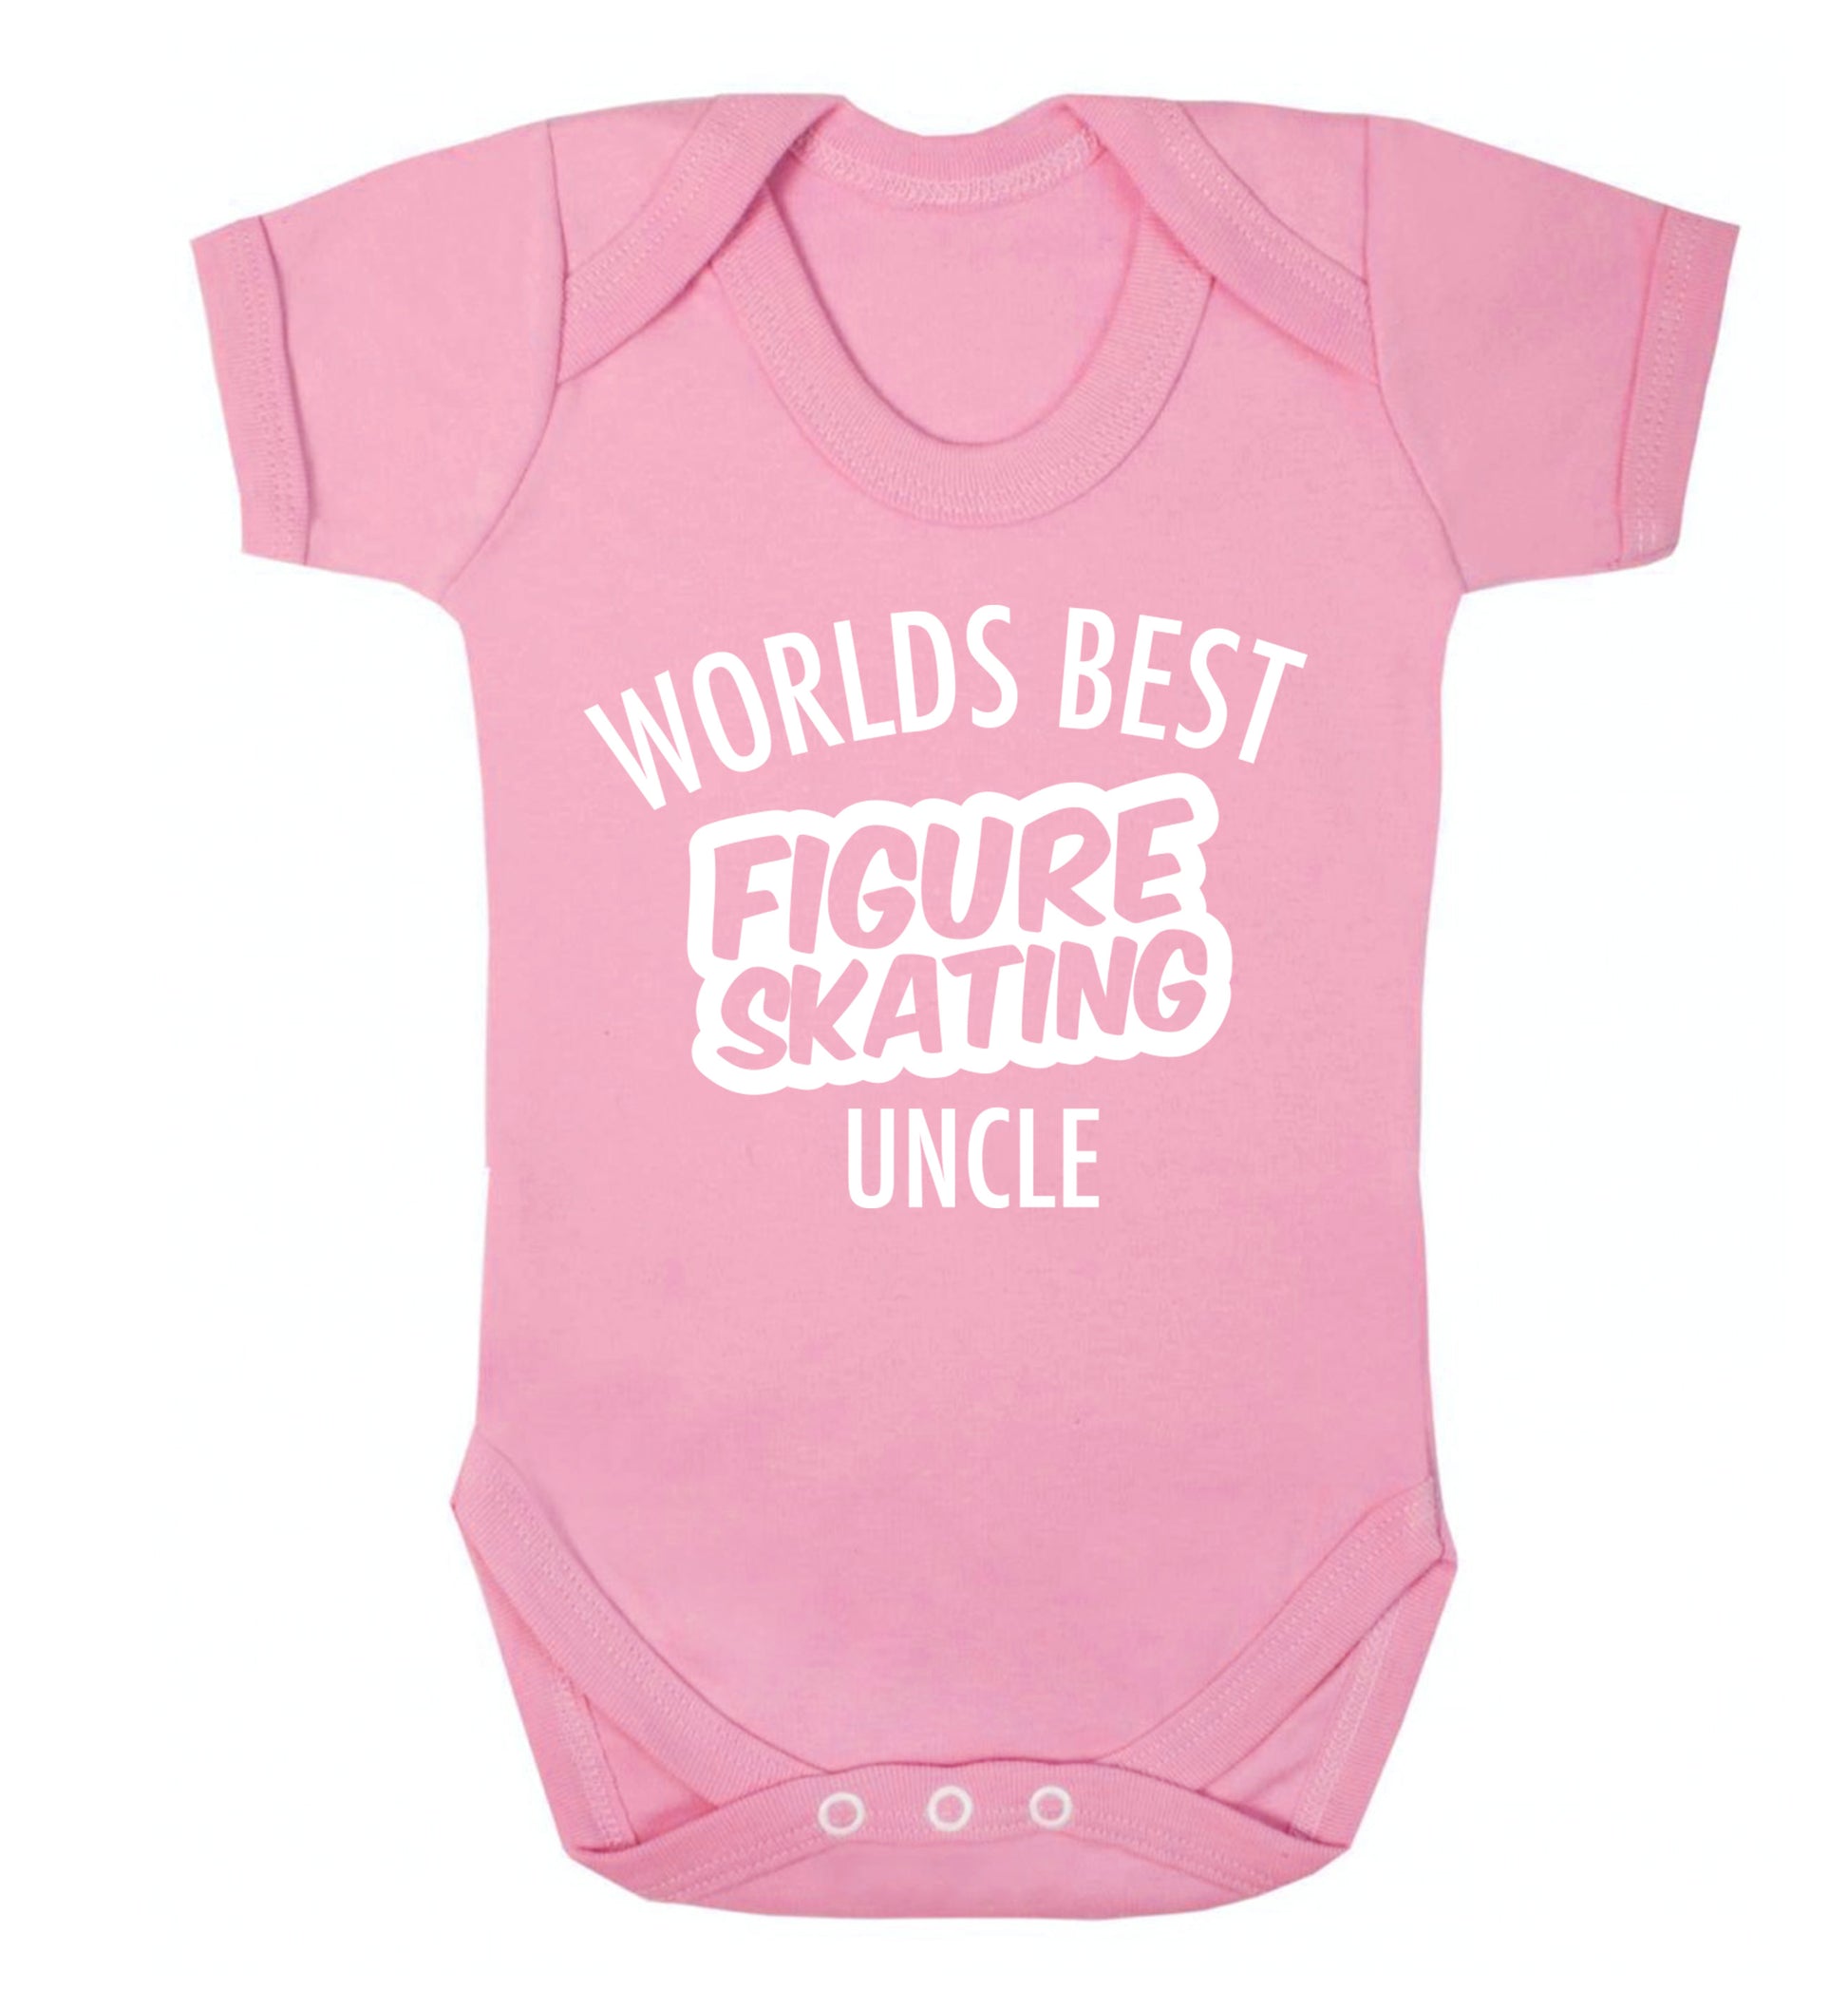 Worlds best figure skating uncle Baby Vest pale pink 18-24 months